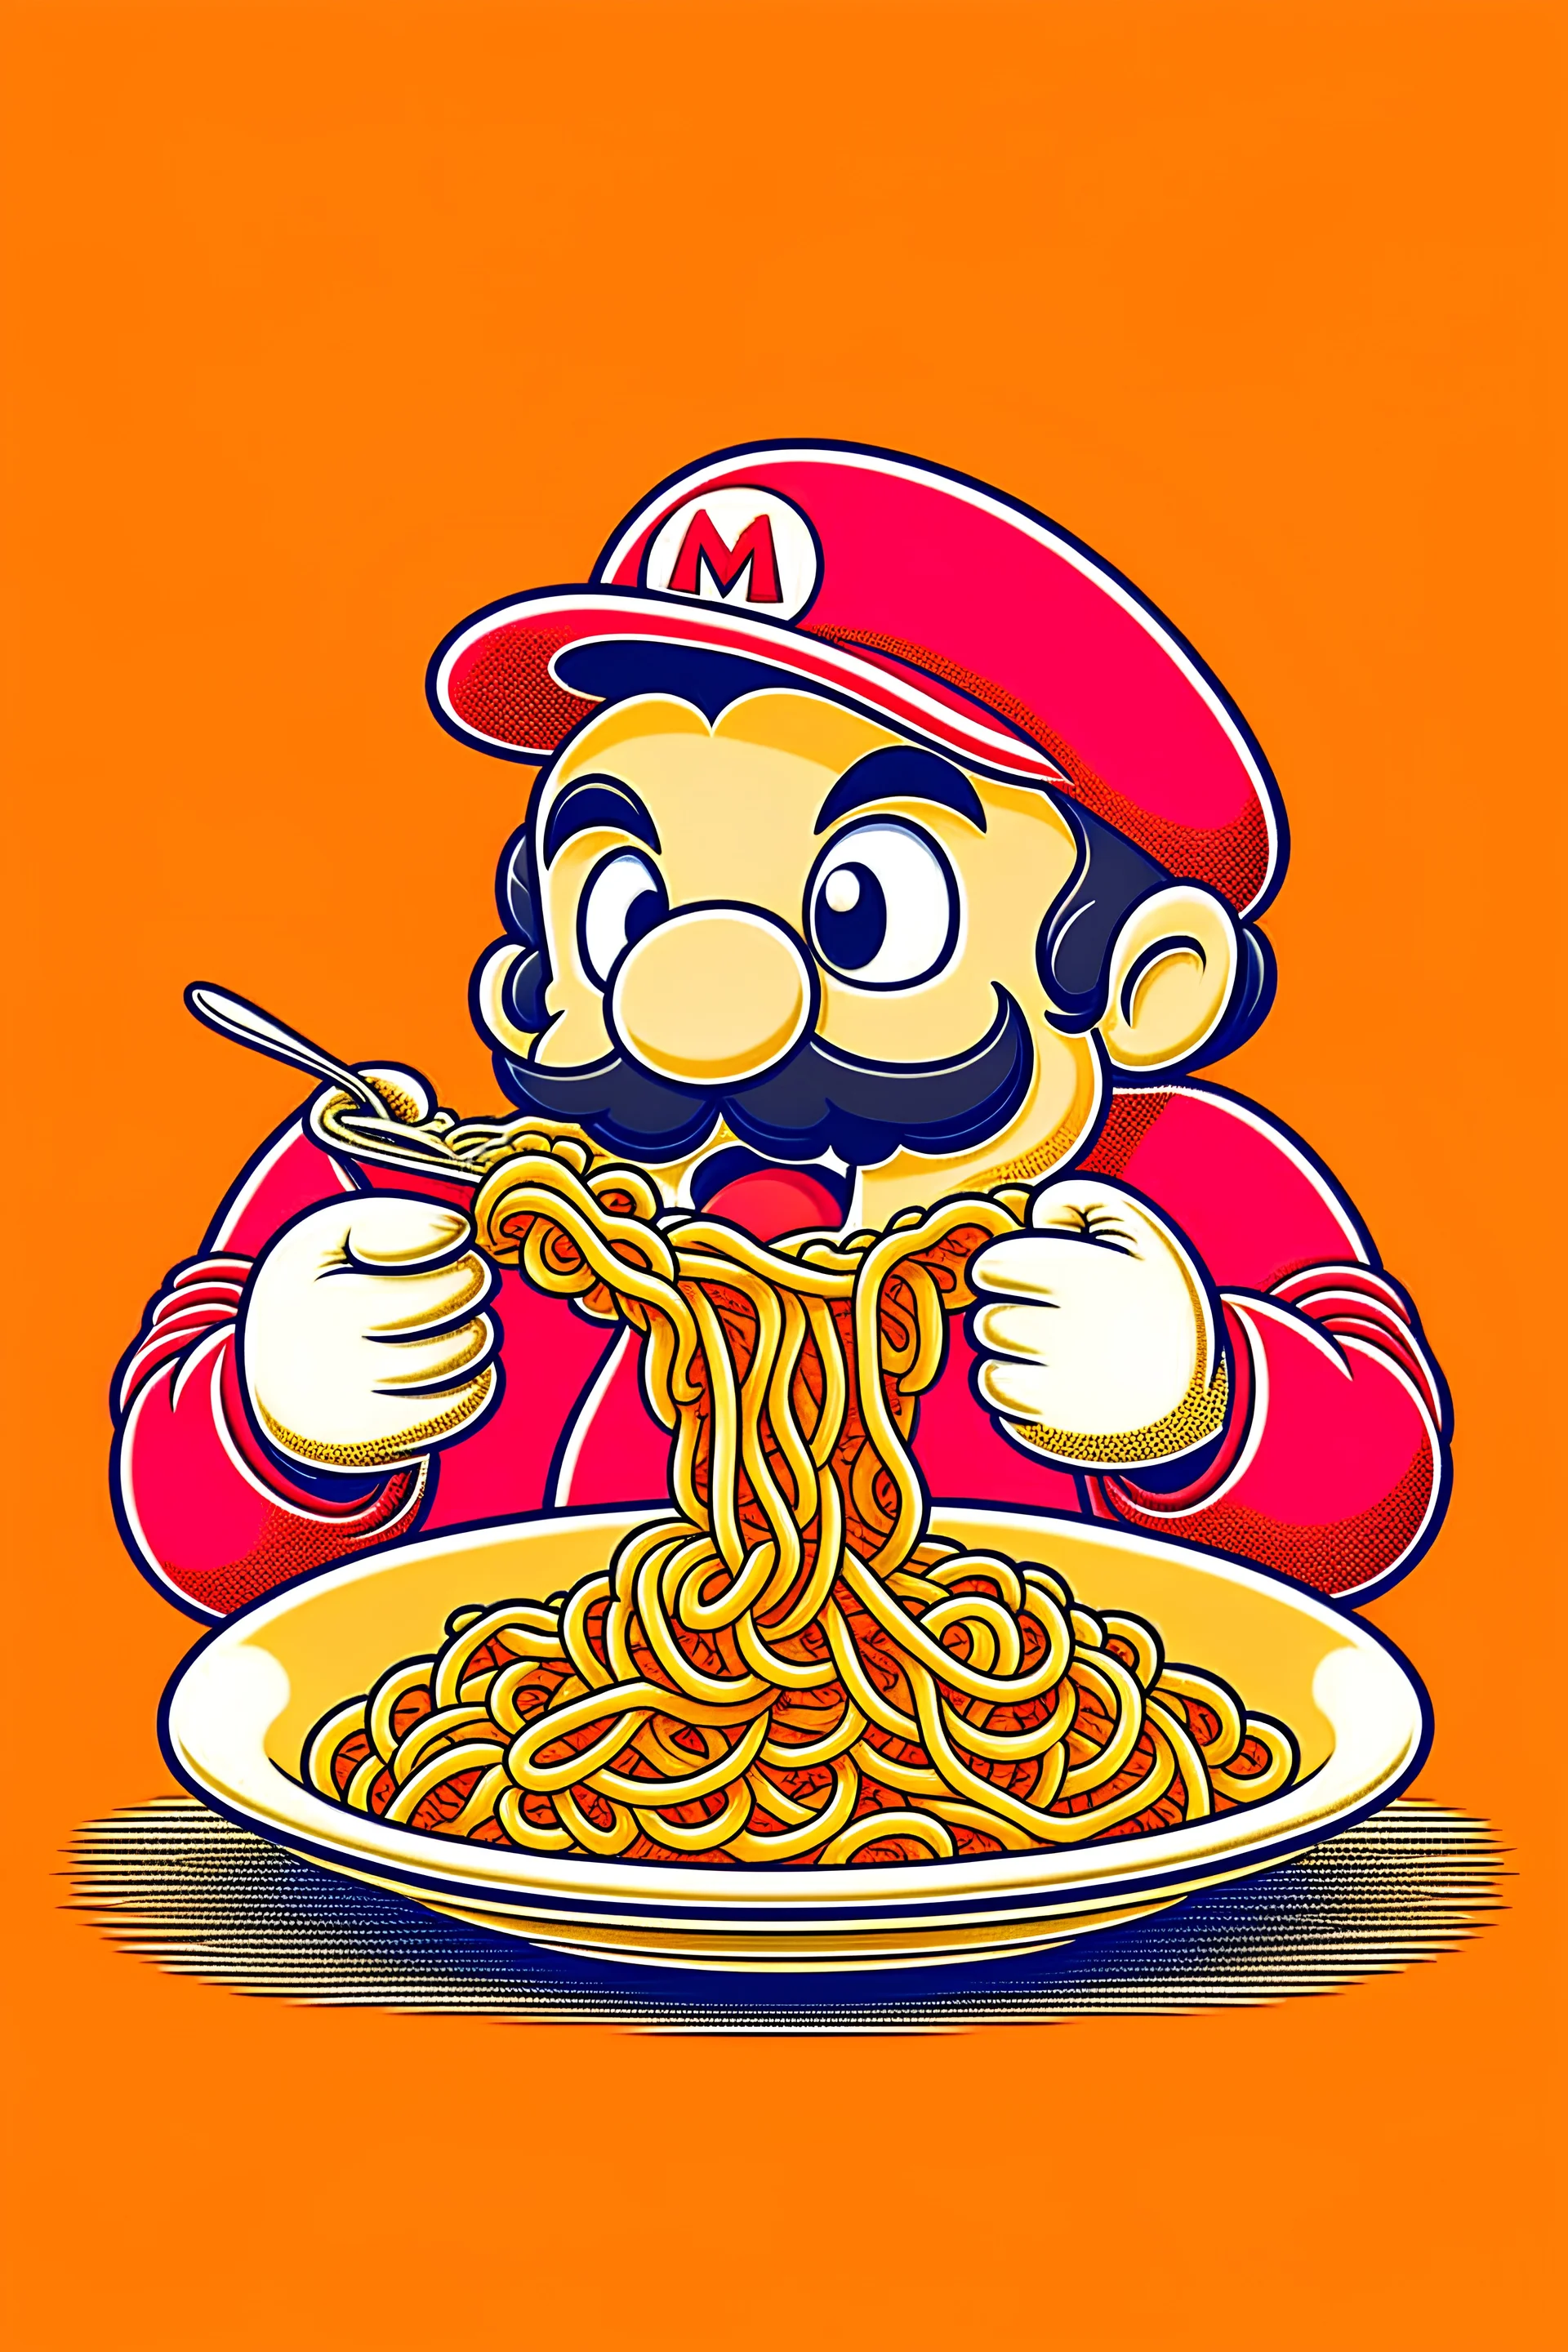 Mario eating spaghetti